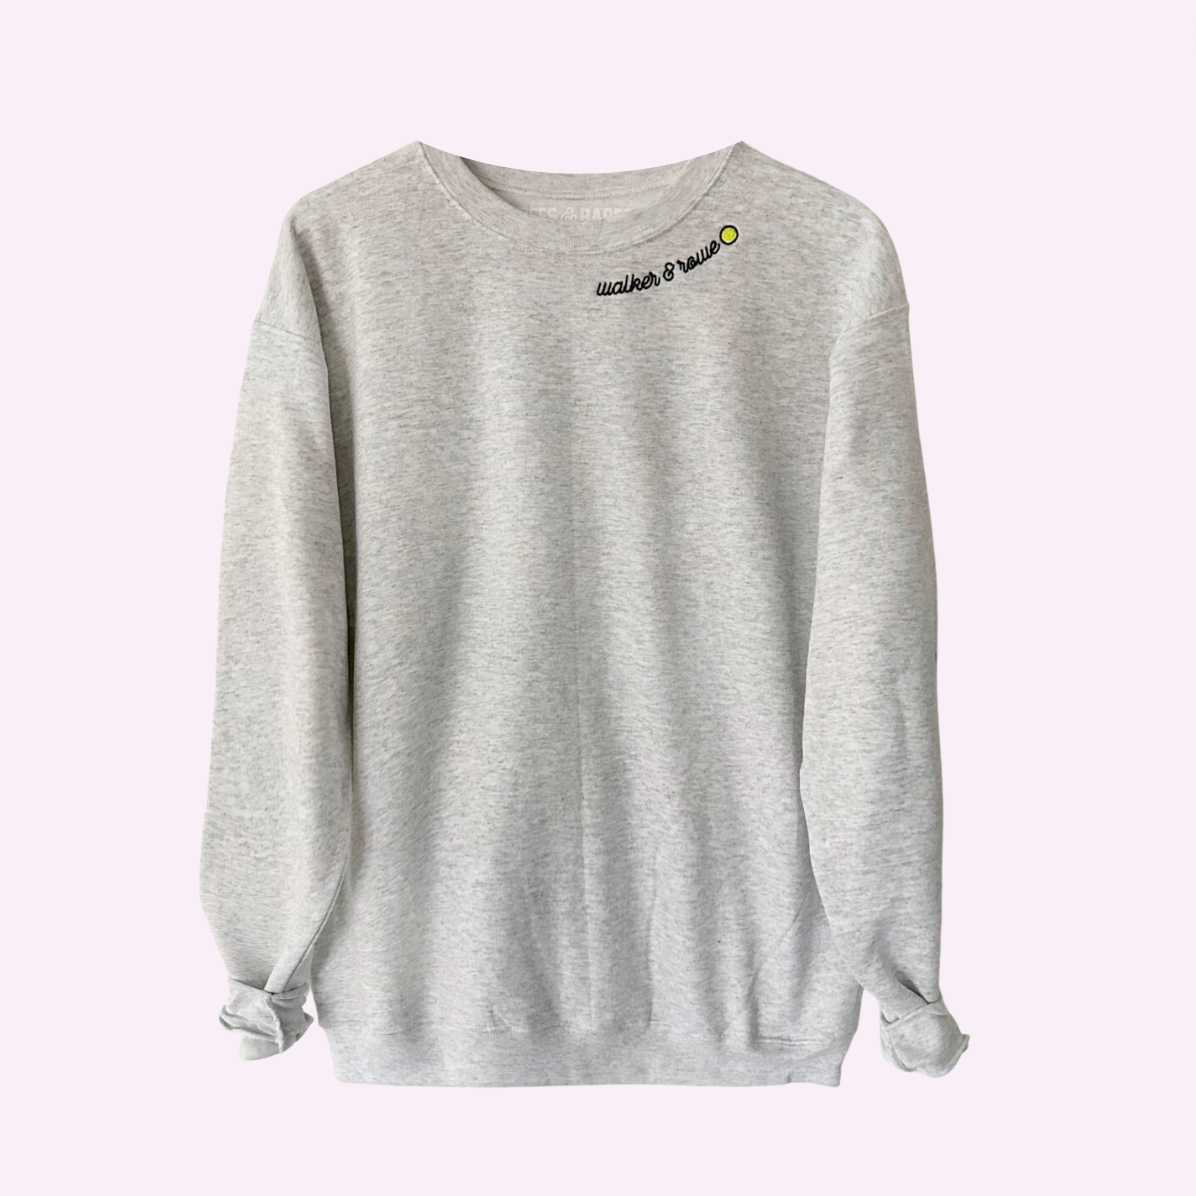 PICKLEBALL STITCH ♡ custom embroidered sweatshirt in gray